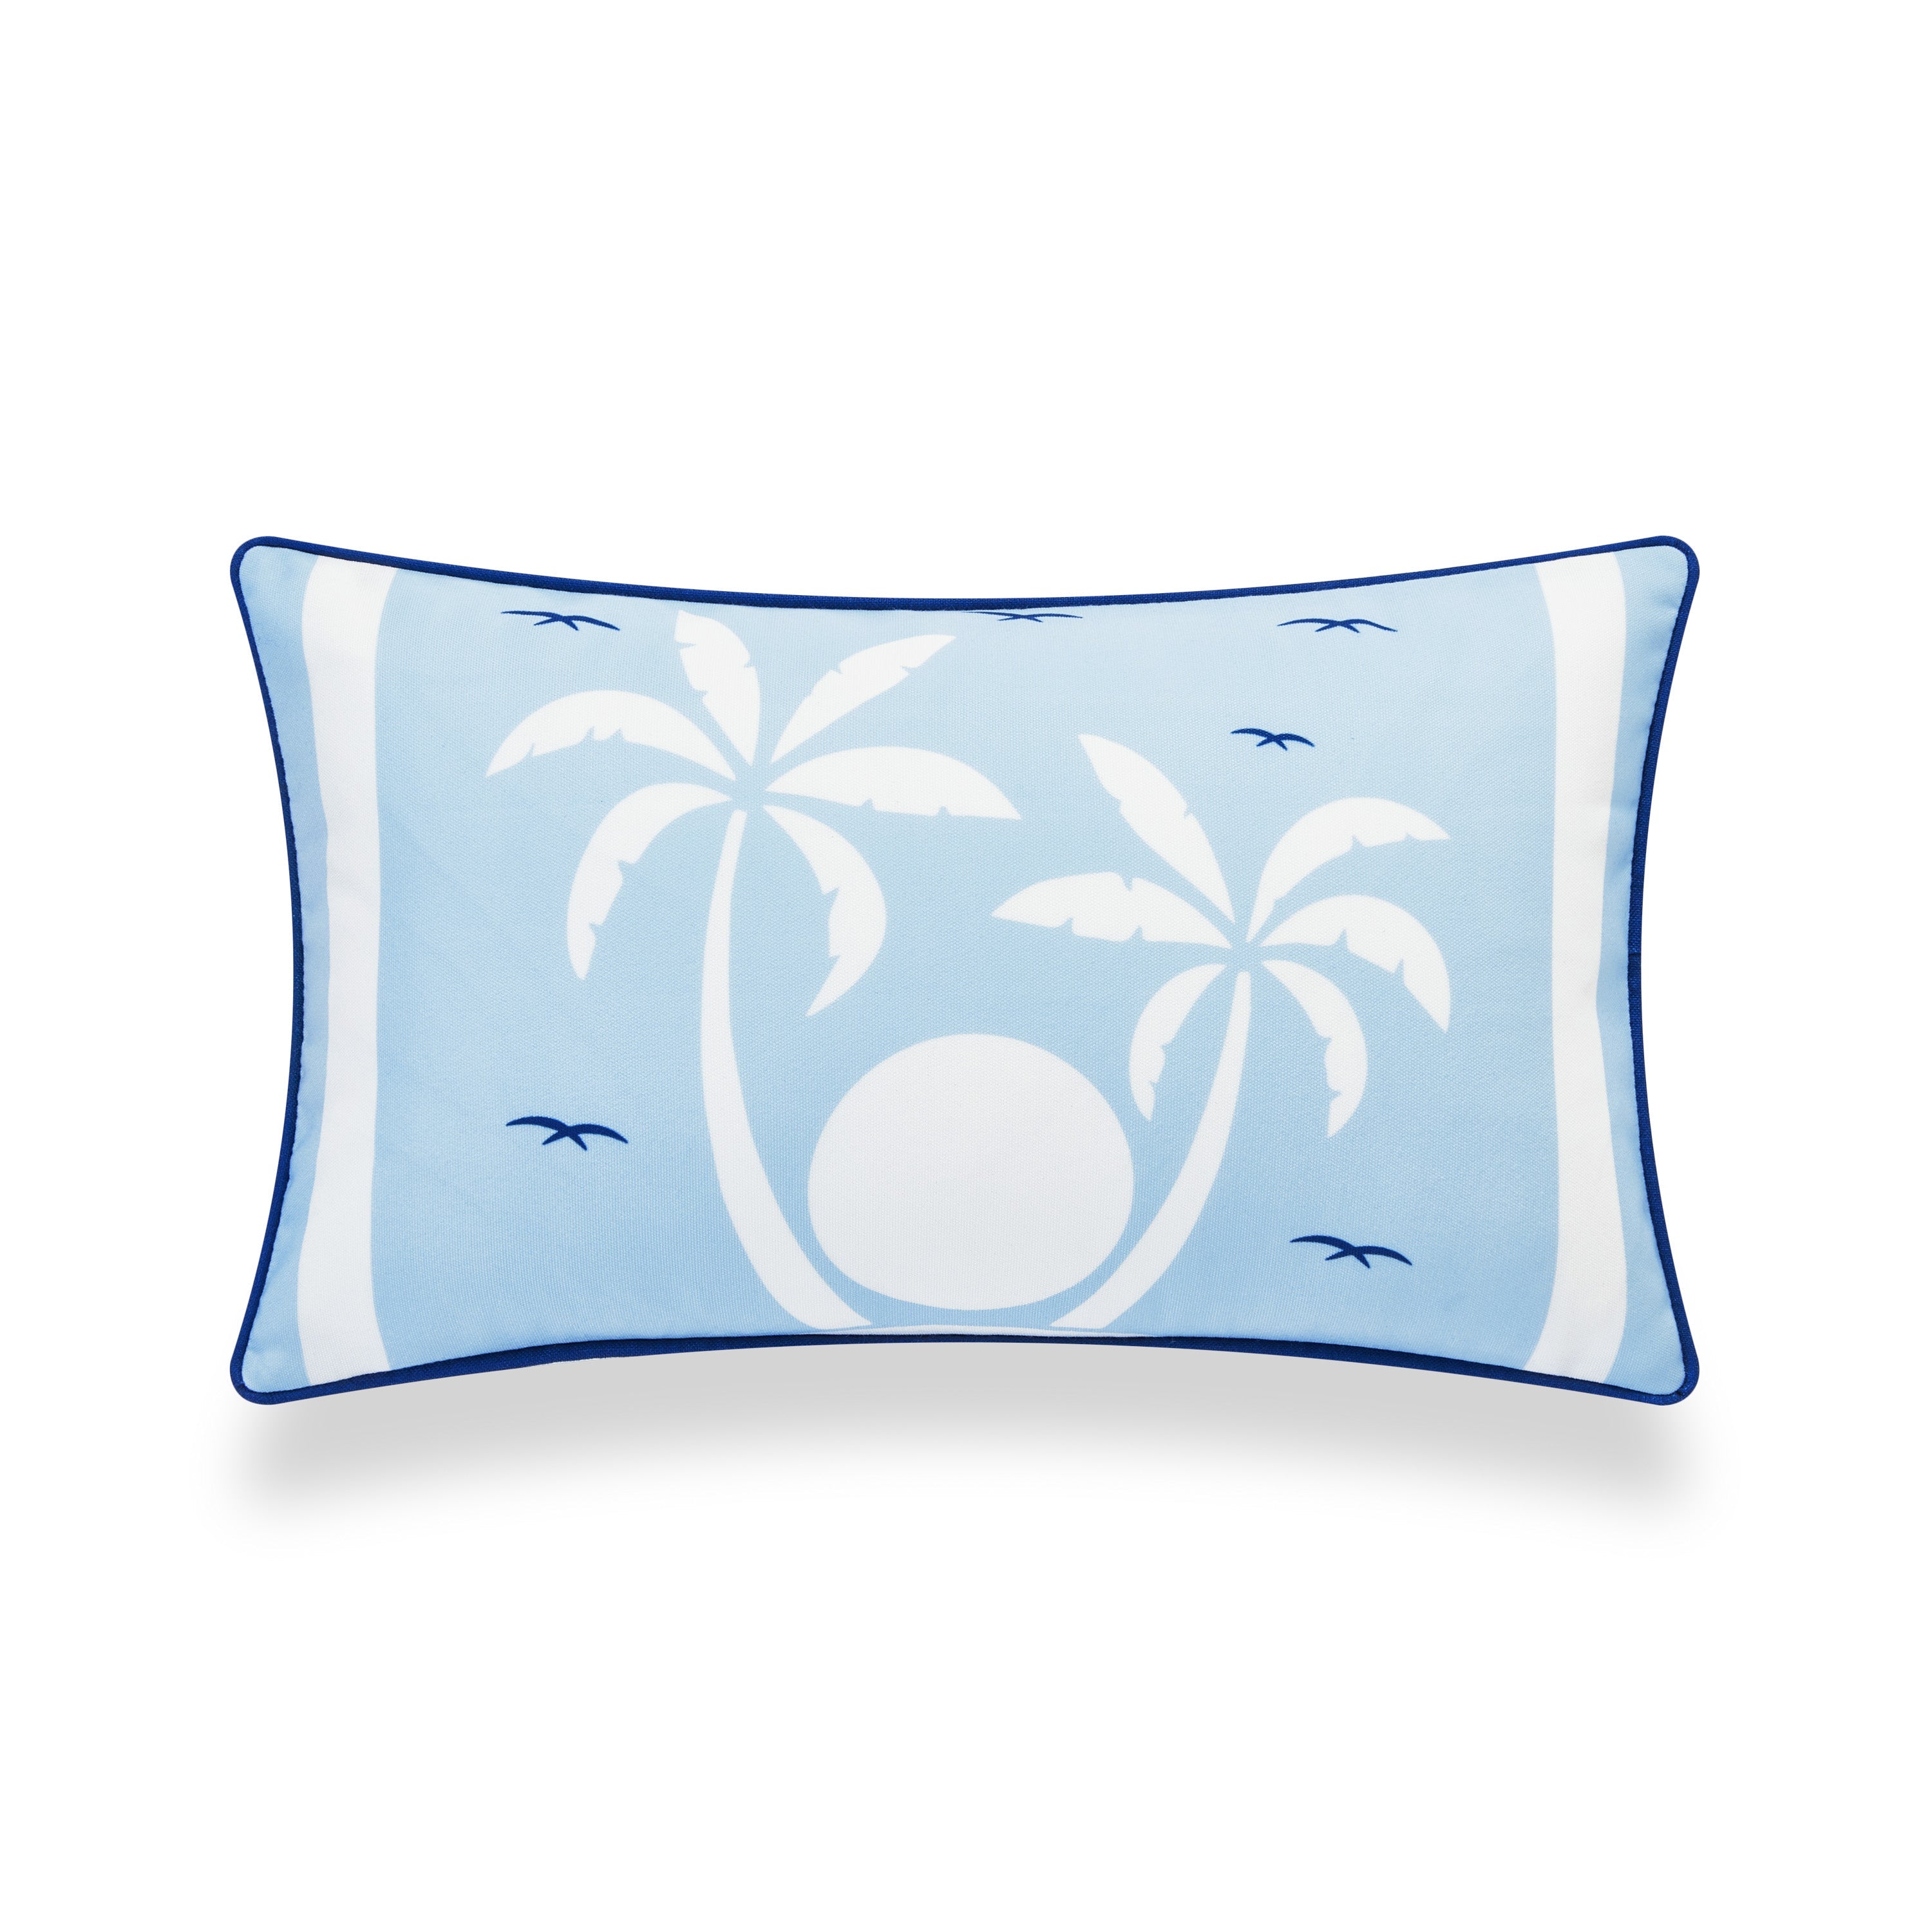 Coastal Hampton Style Indoor Outdoor Lumbar Pillow Cover, Palm Tree, Baby Blue Navy, 12"x20"